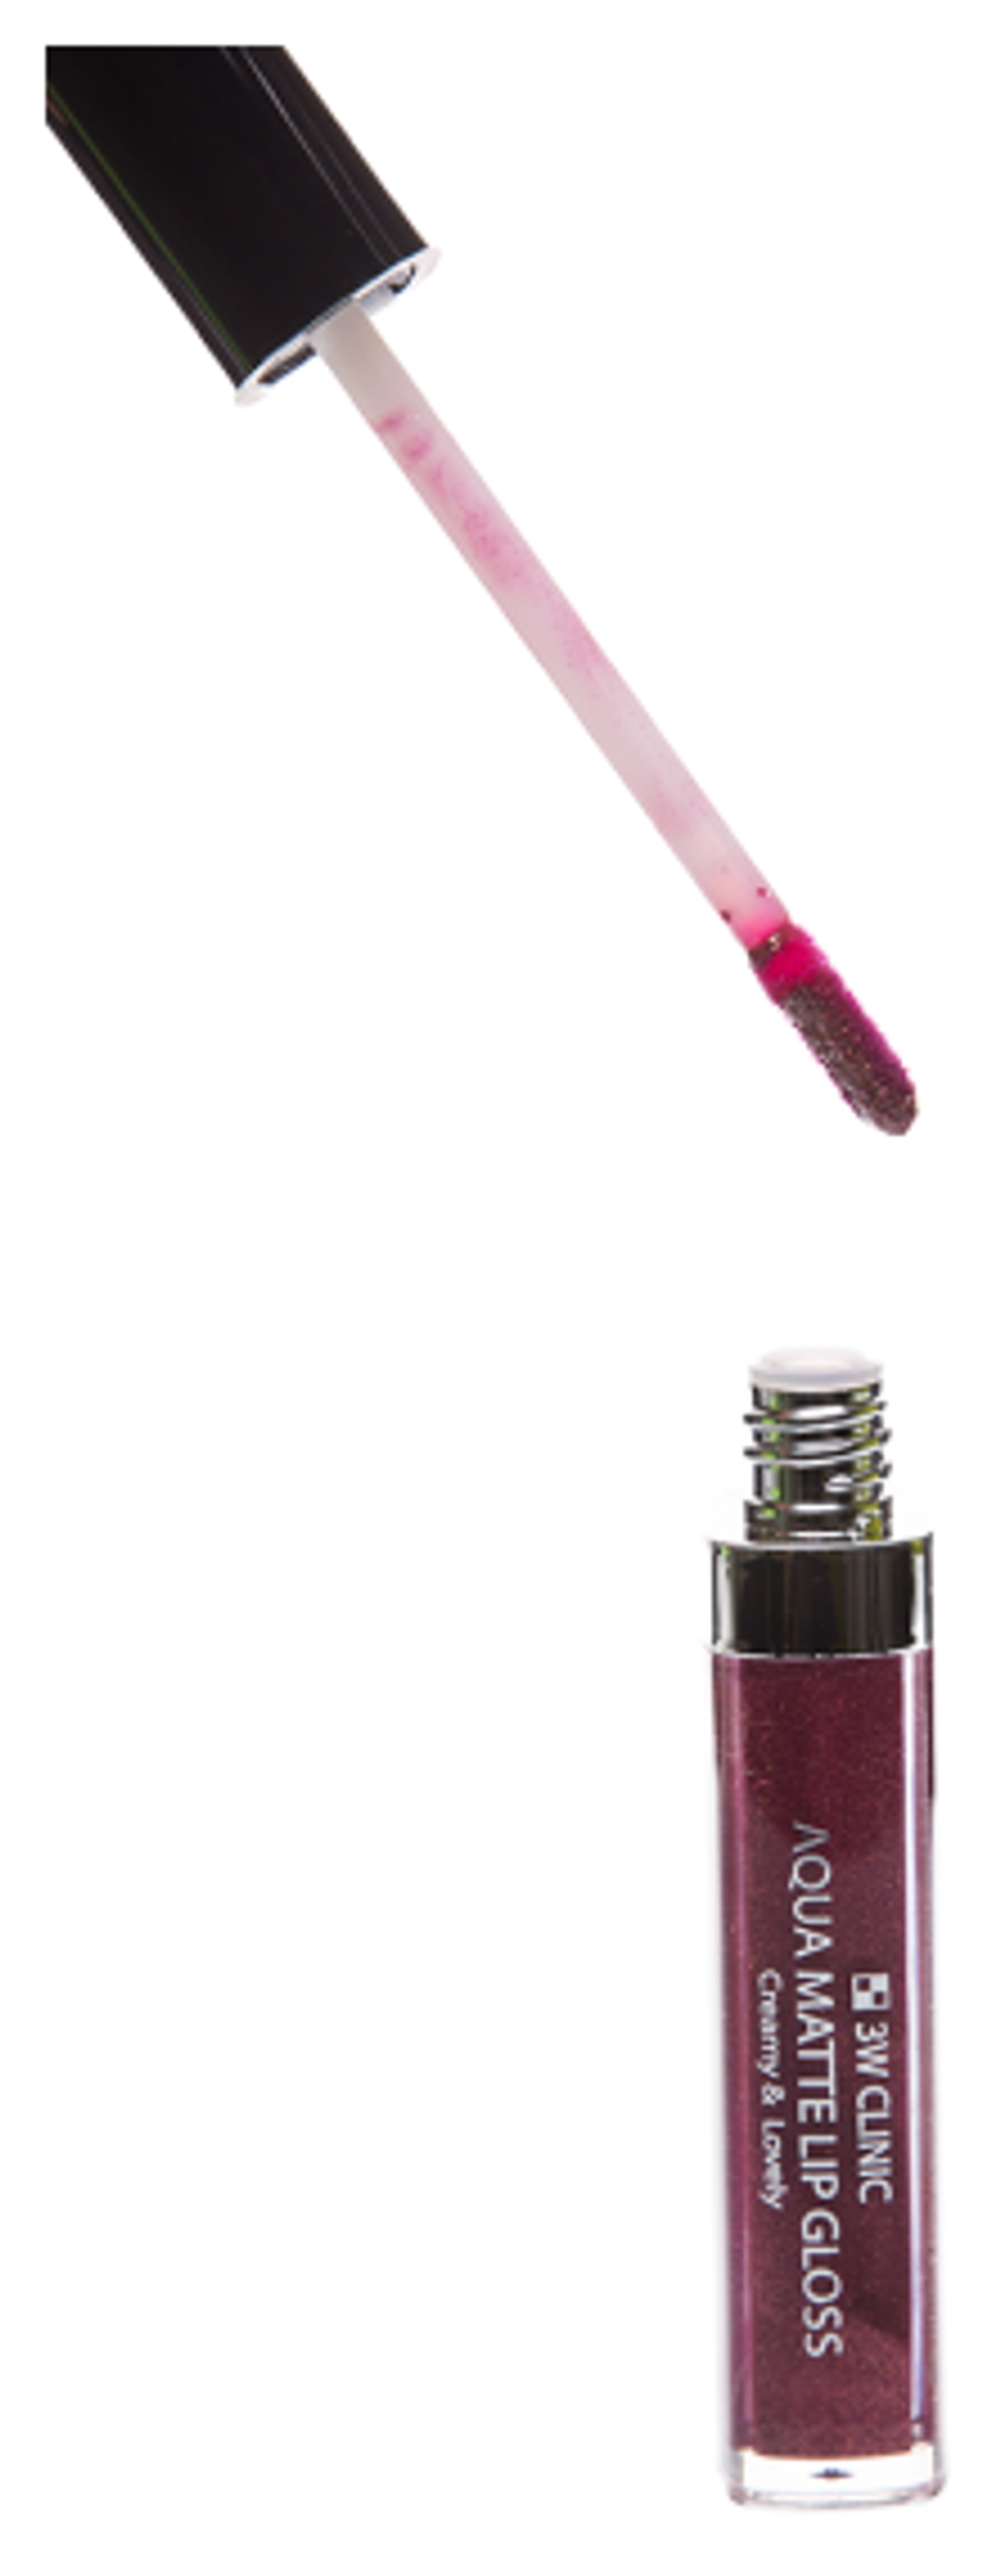 Блеск для губ 3W Clinic #05 Aqua Matte Lip Gloss Ruby Purple цвет Рубиново-Фиолетовый 6,5 г